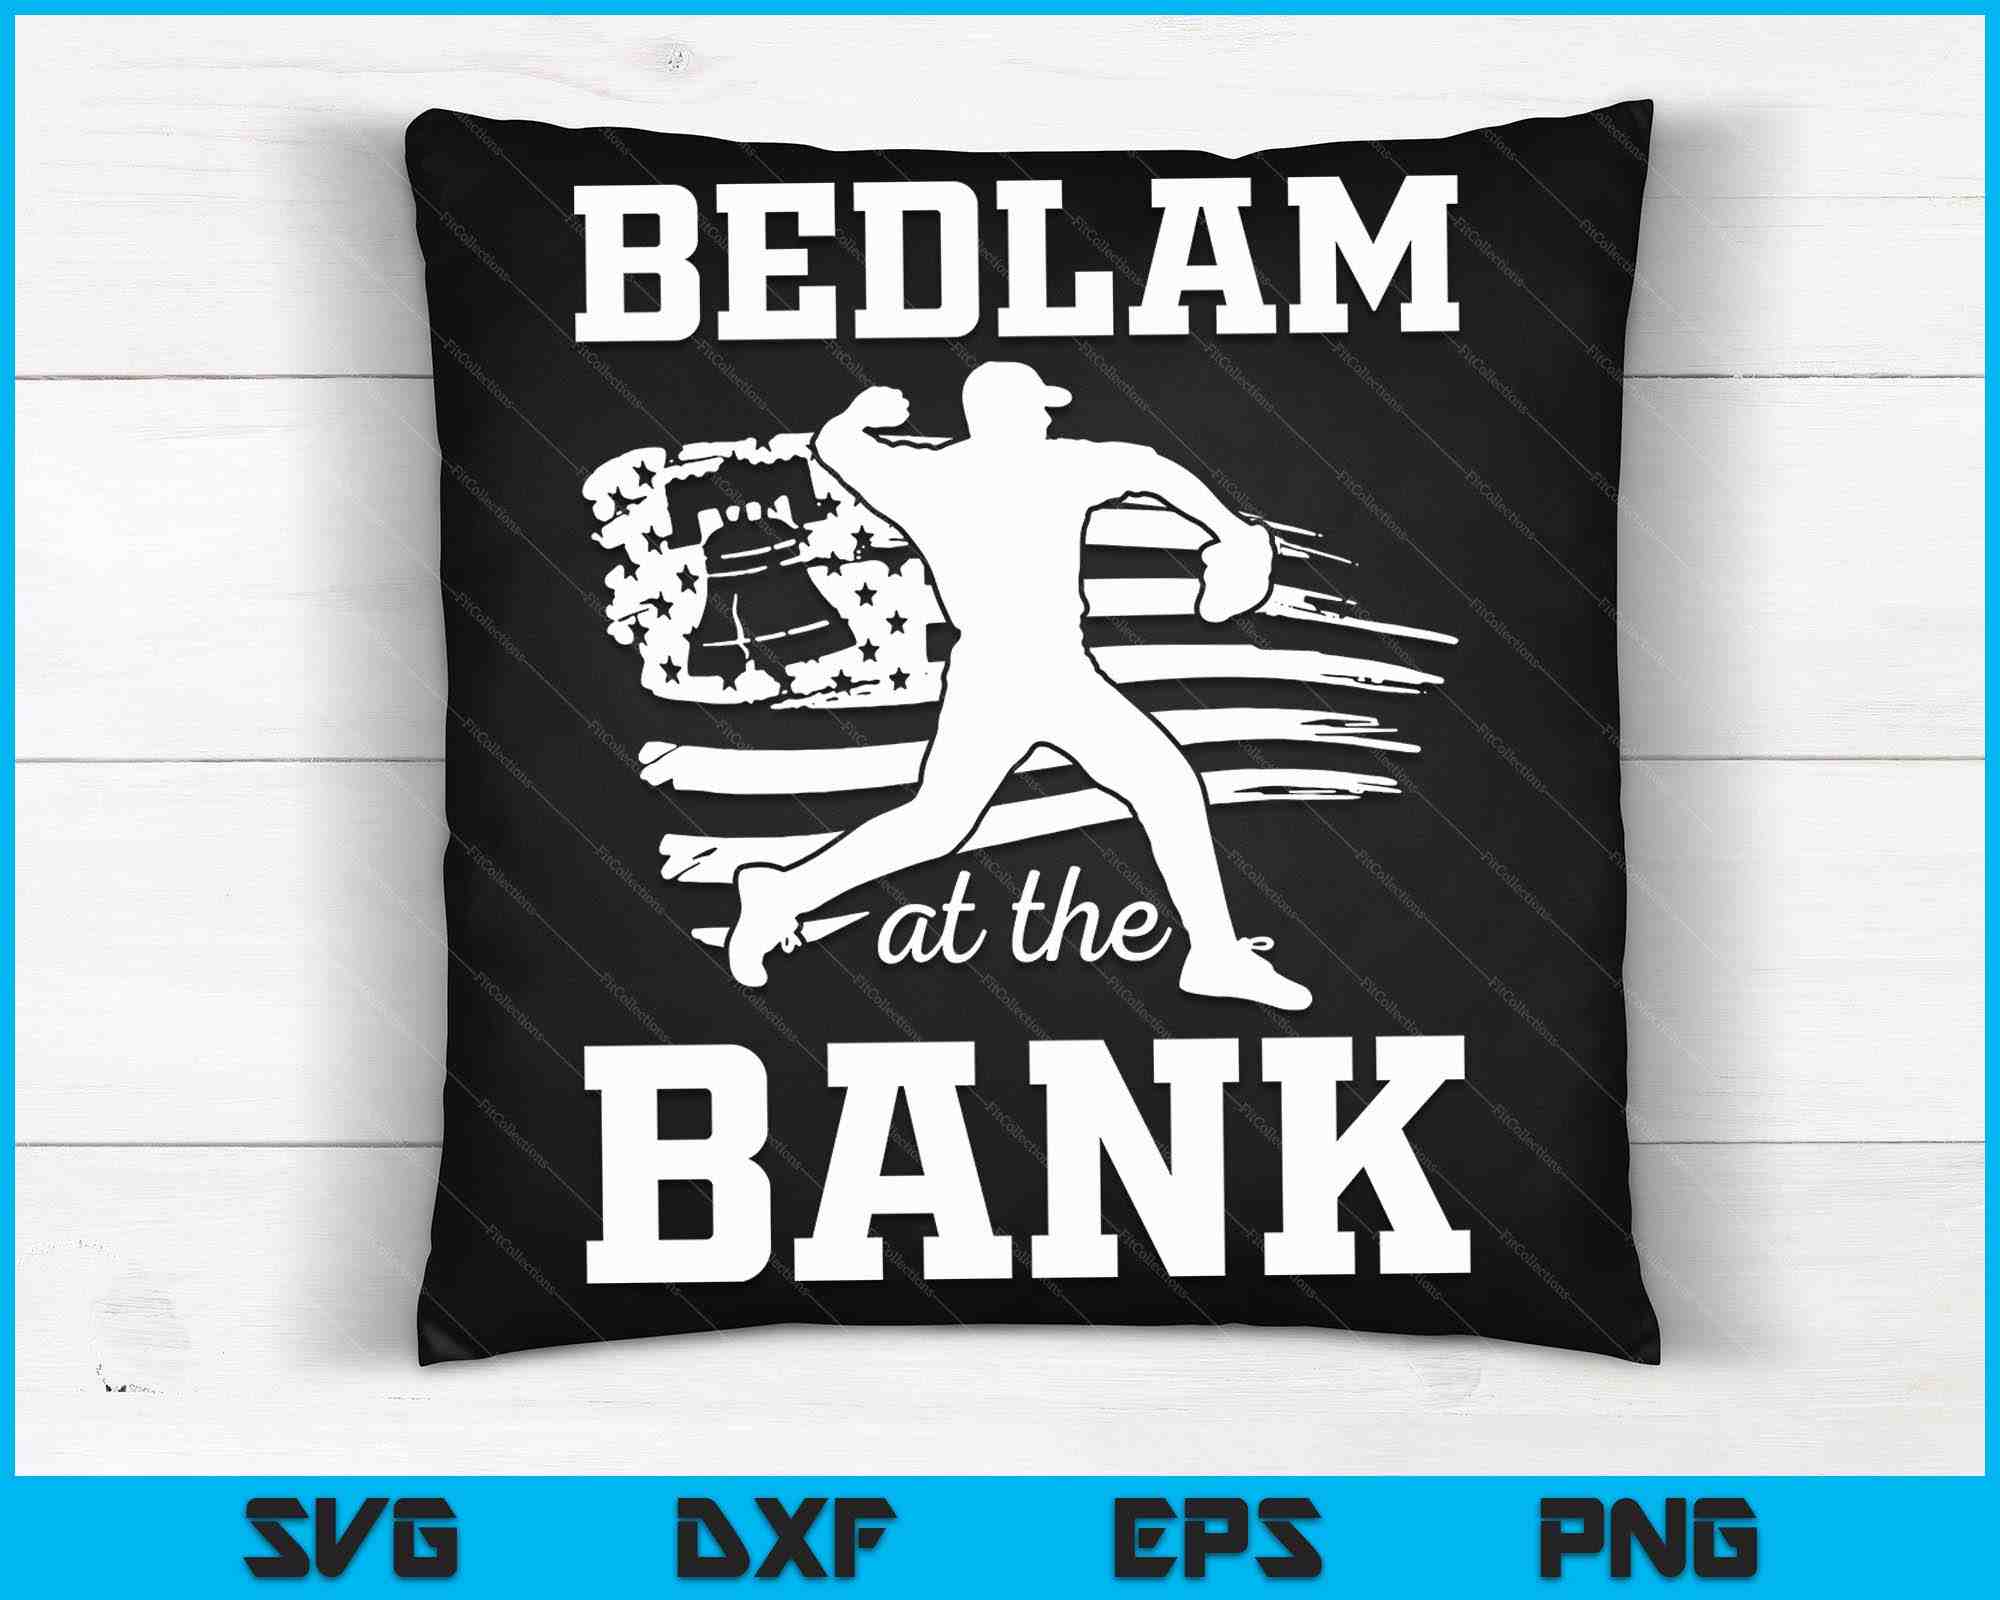 Philadelphia Phillies on X: Bedlam at the Bank